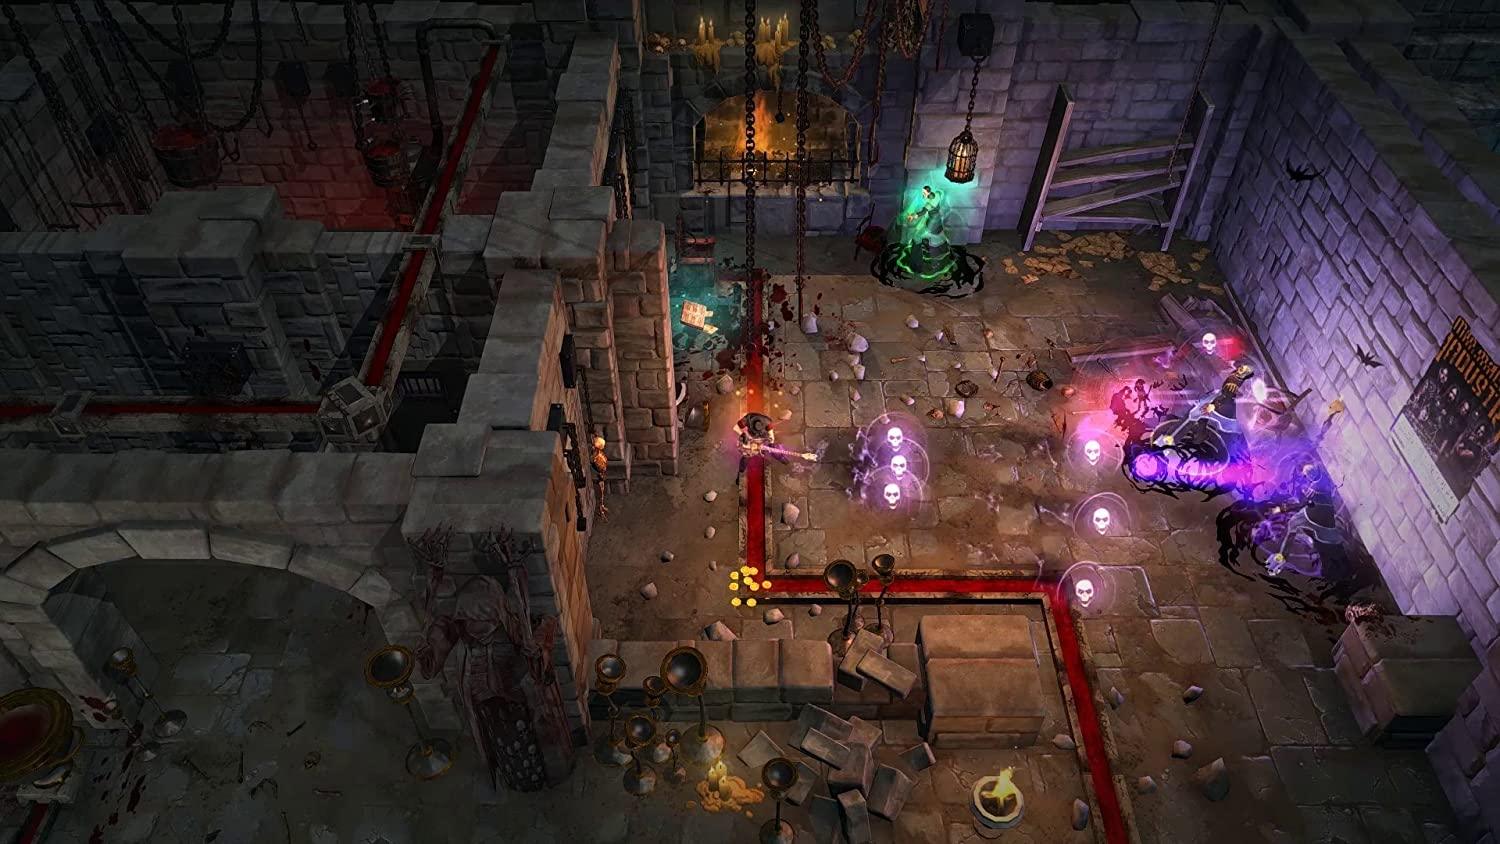 Jogo Warhammer: End Times - Vermintide - PS4 - ShopB - 14 anos!